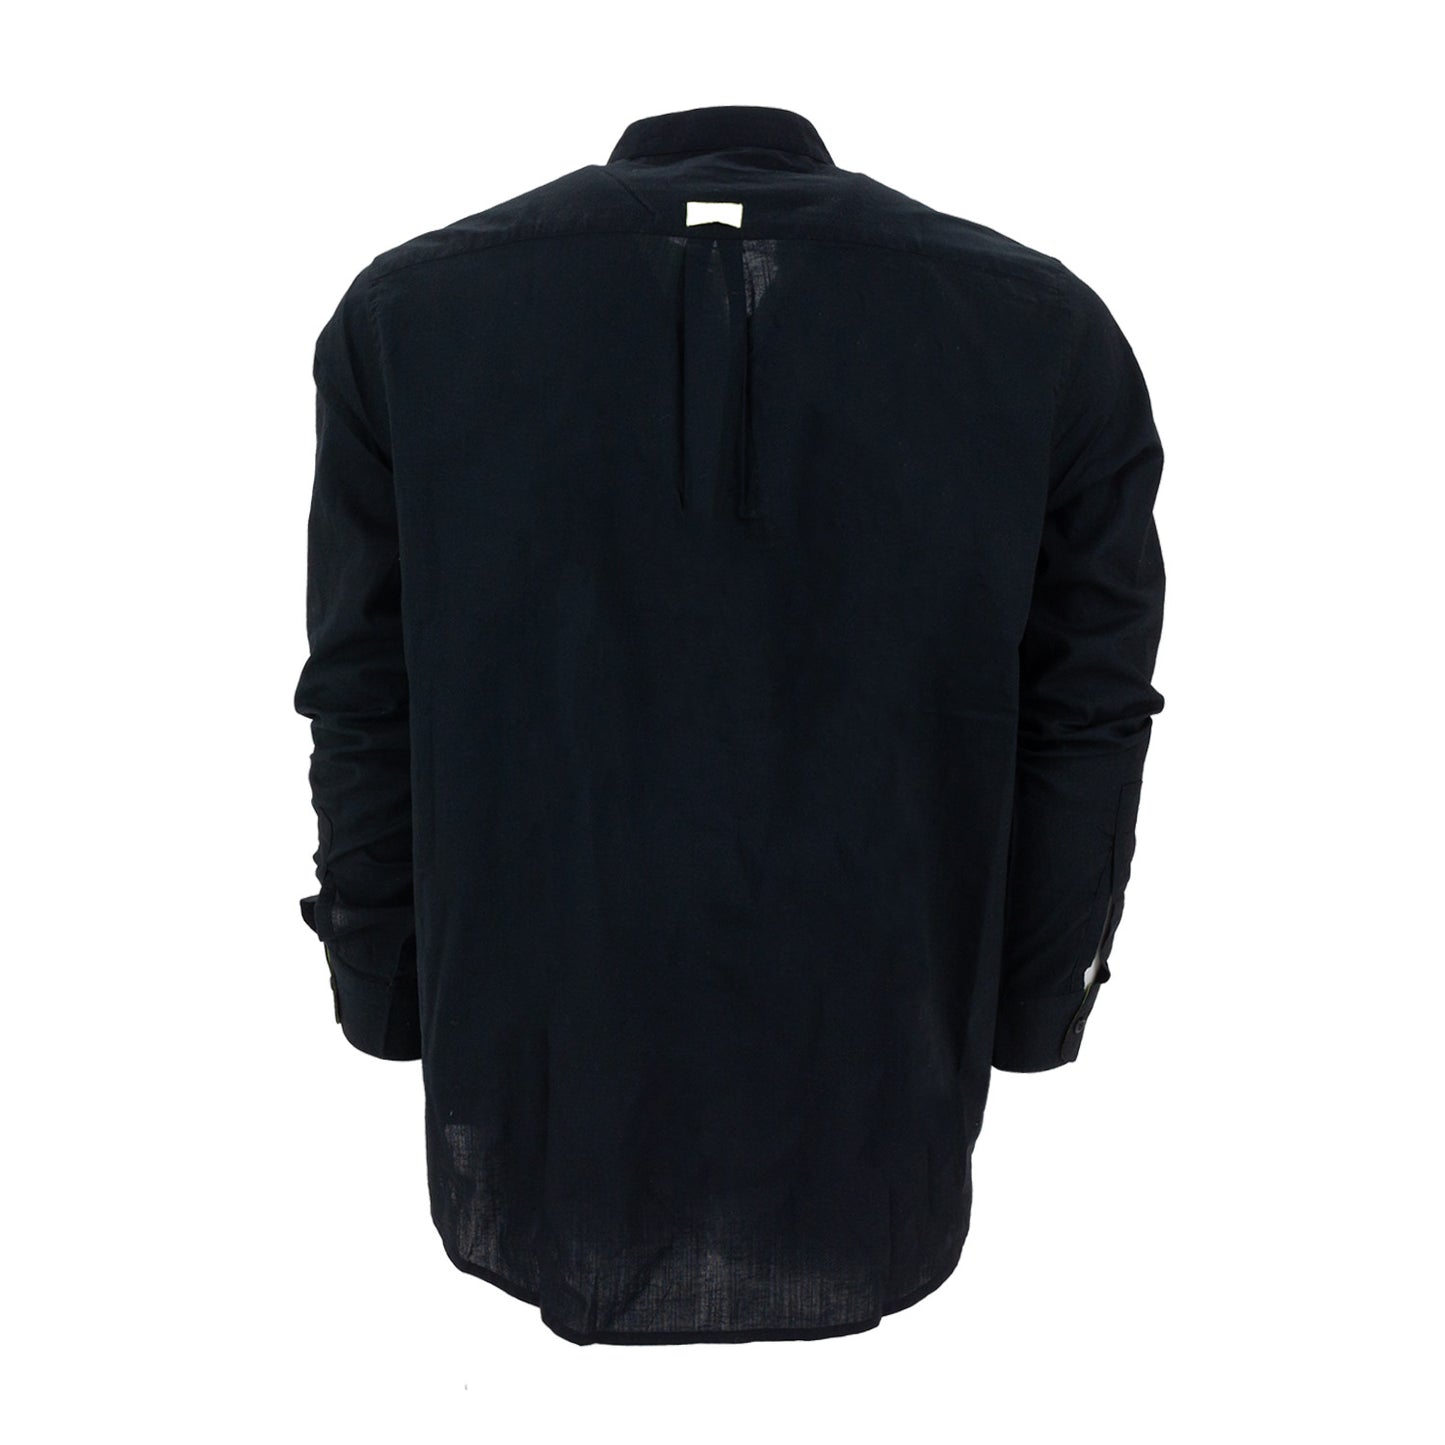 Kuro Black Collection - The  Mandarin Linen Shirt